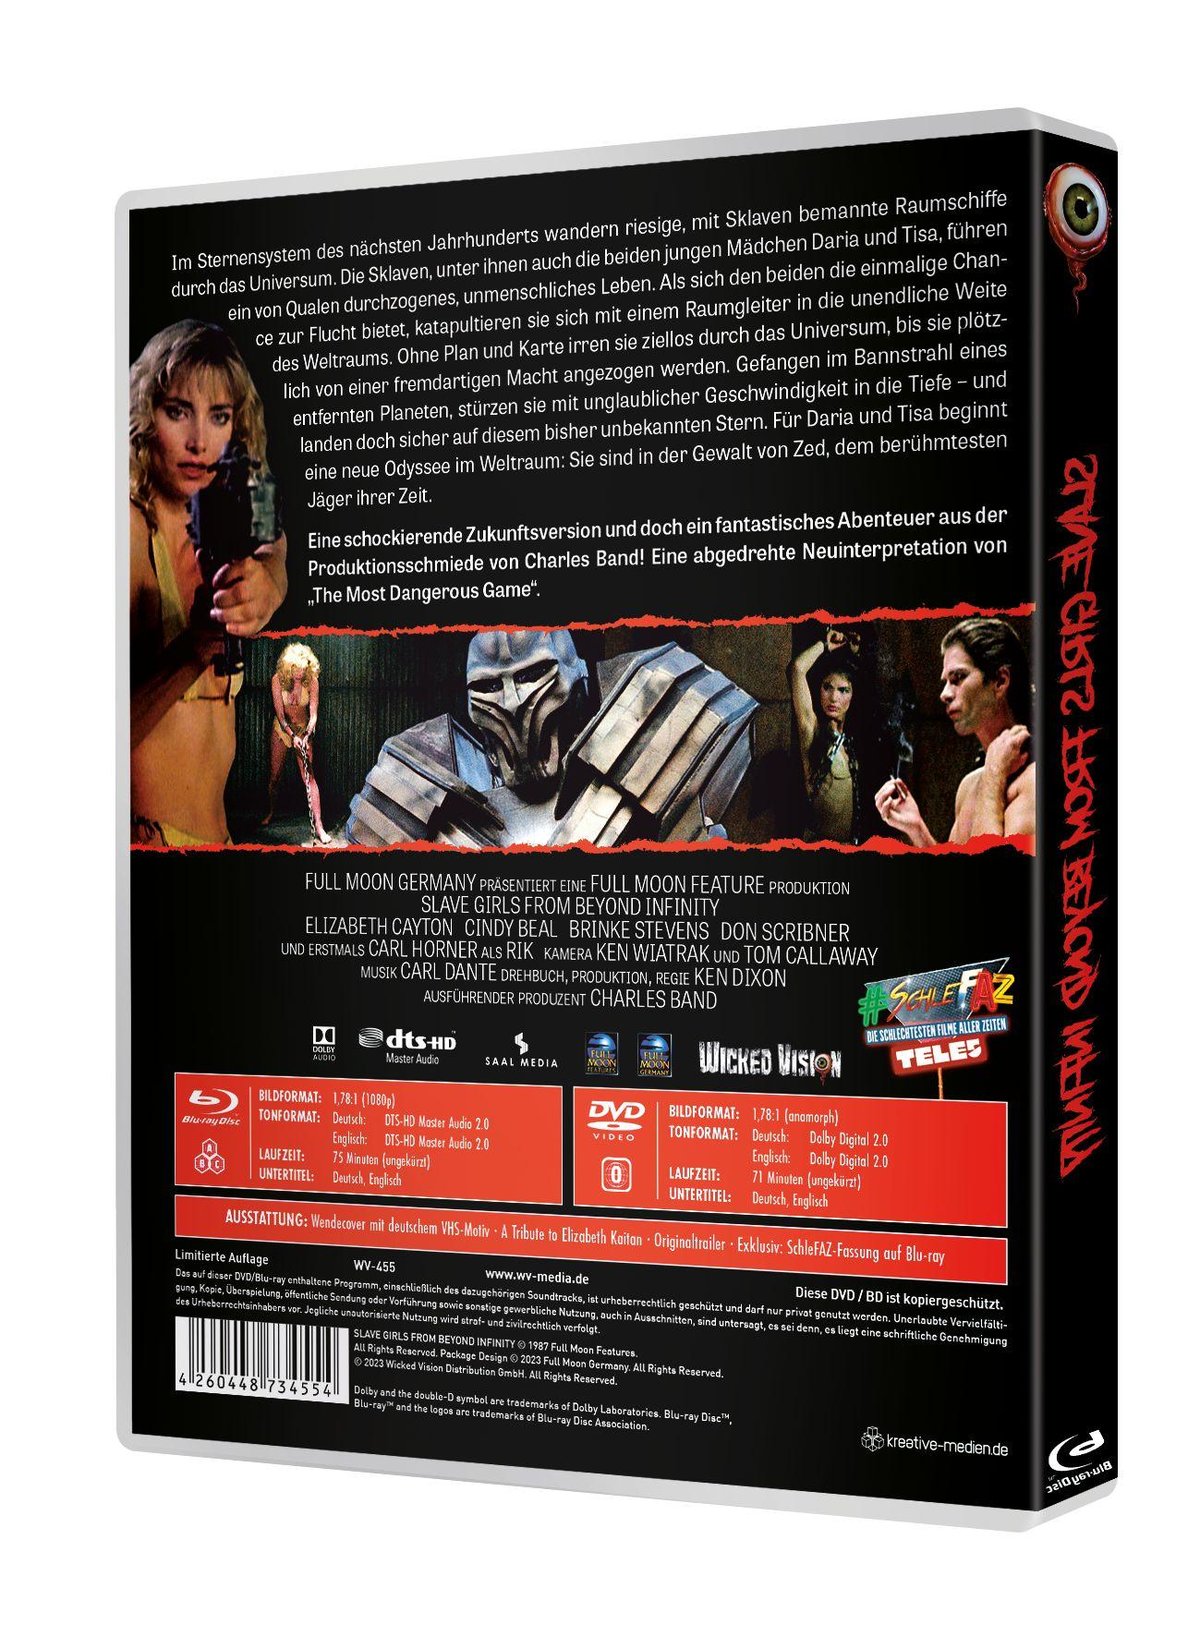 Slave Girls from Beyond Infinity - Jäger der verschollenen Galaxie - Uncut Edition  (DVD+blu-ray)